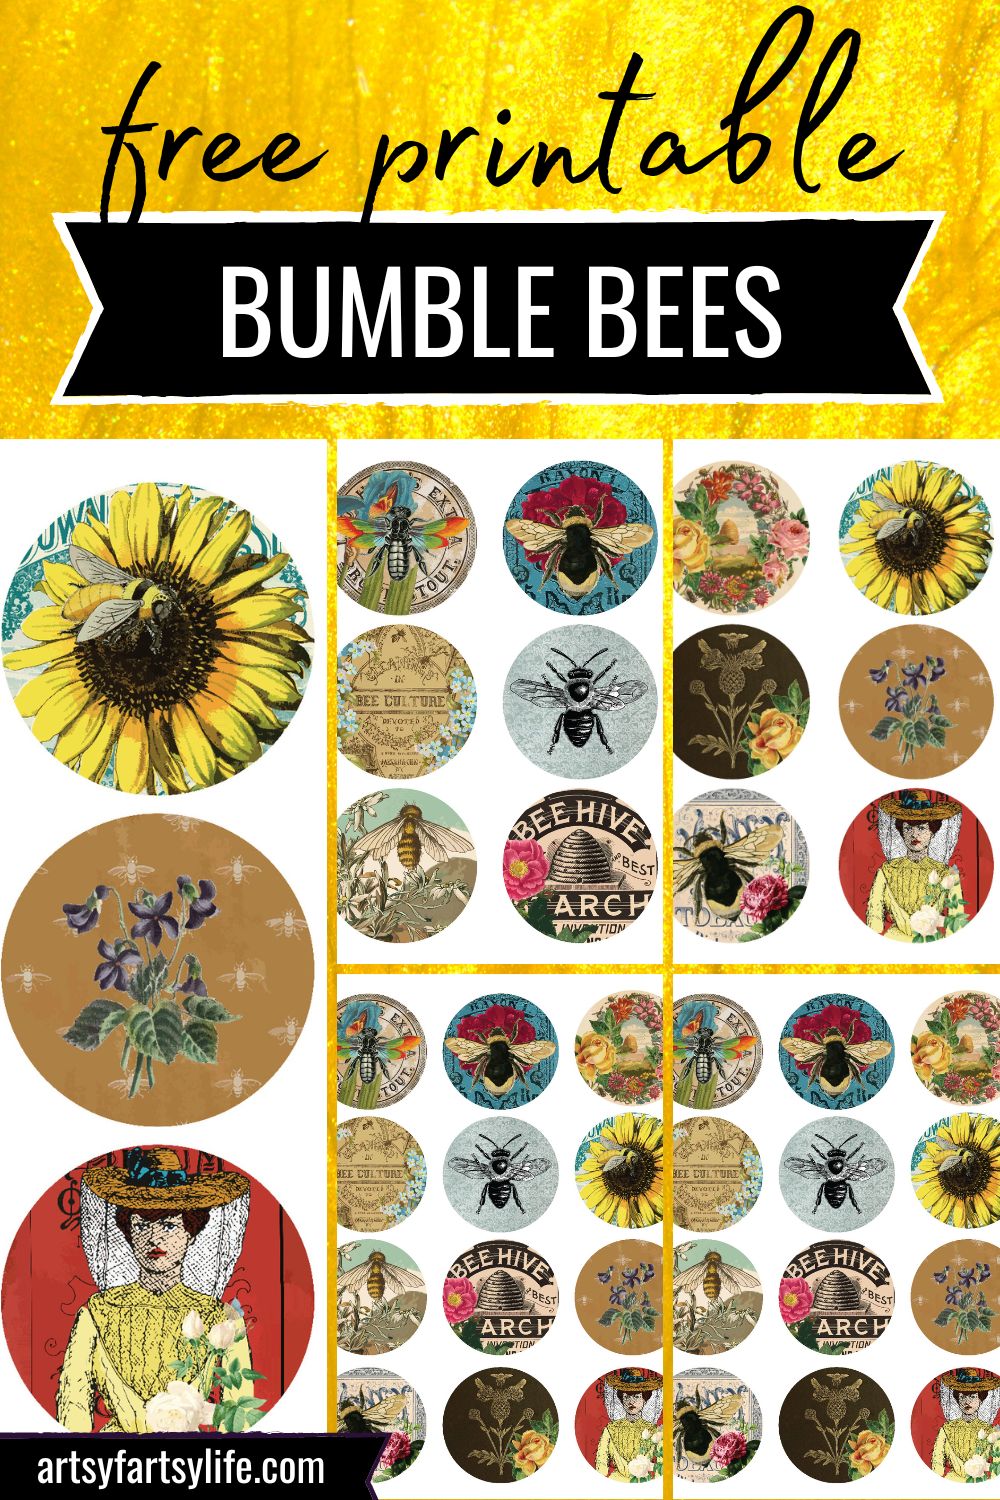 Bumble Bee Circles Ephemera - Free Printables